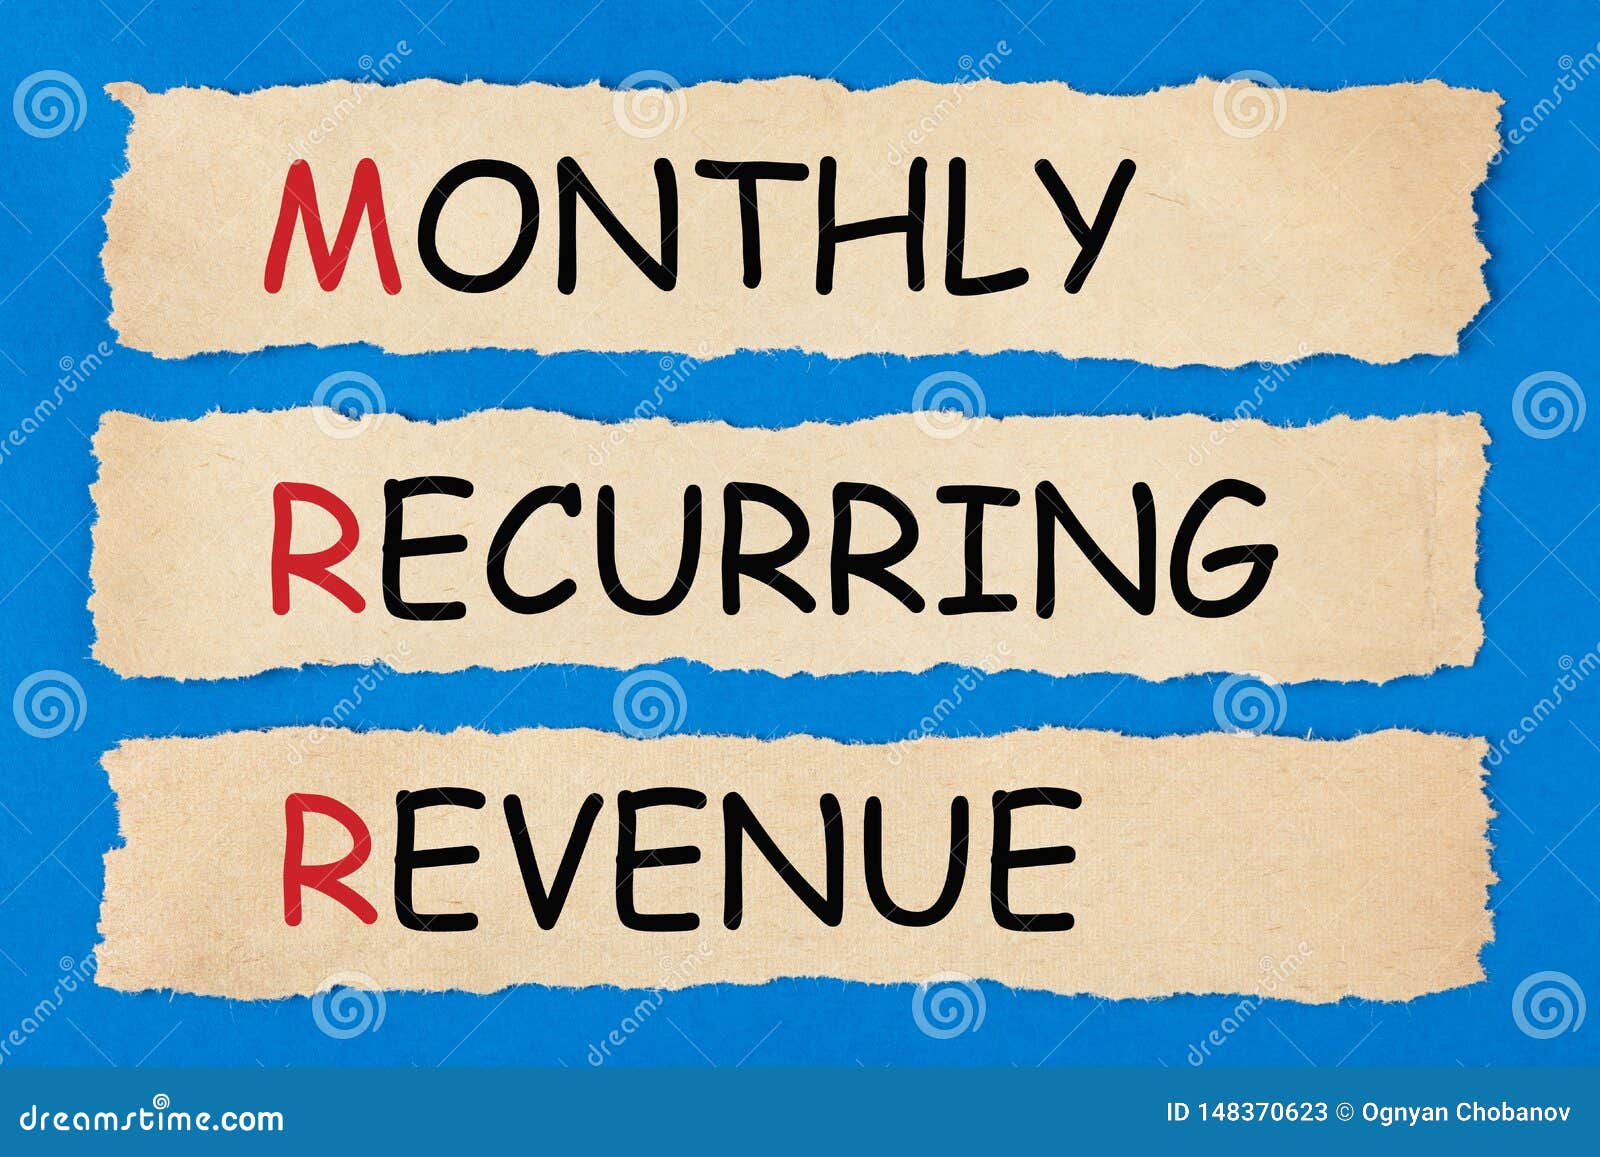 monthly recurring revenuemrr